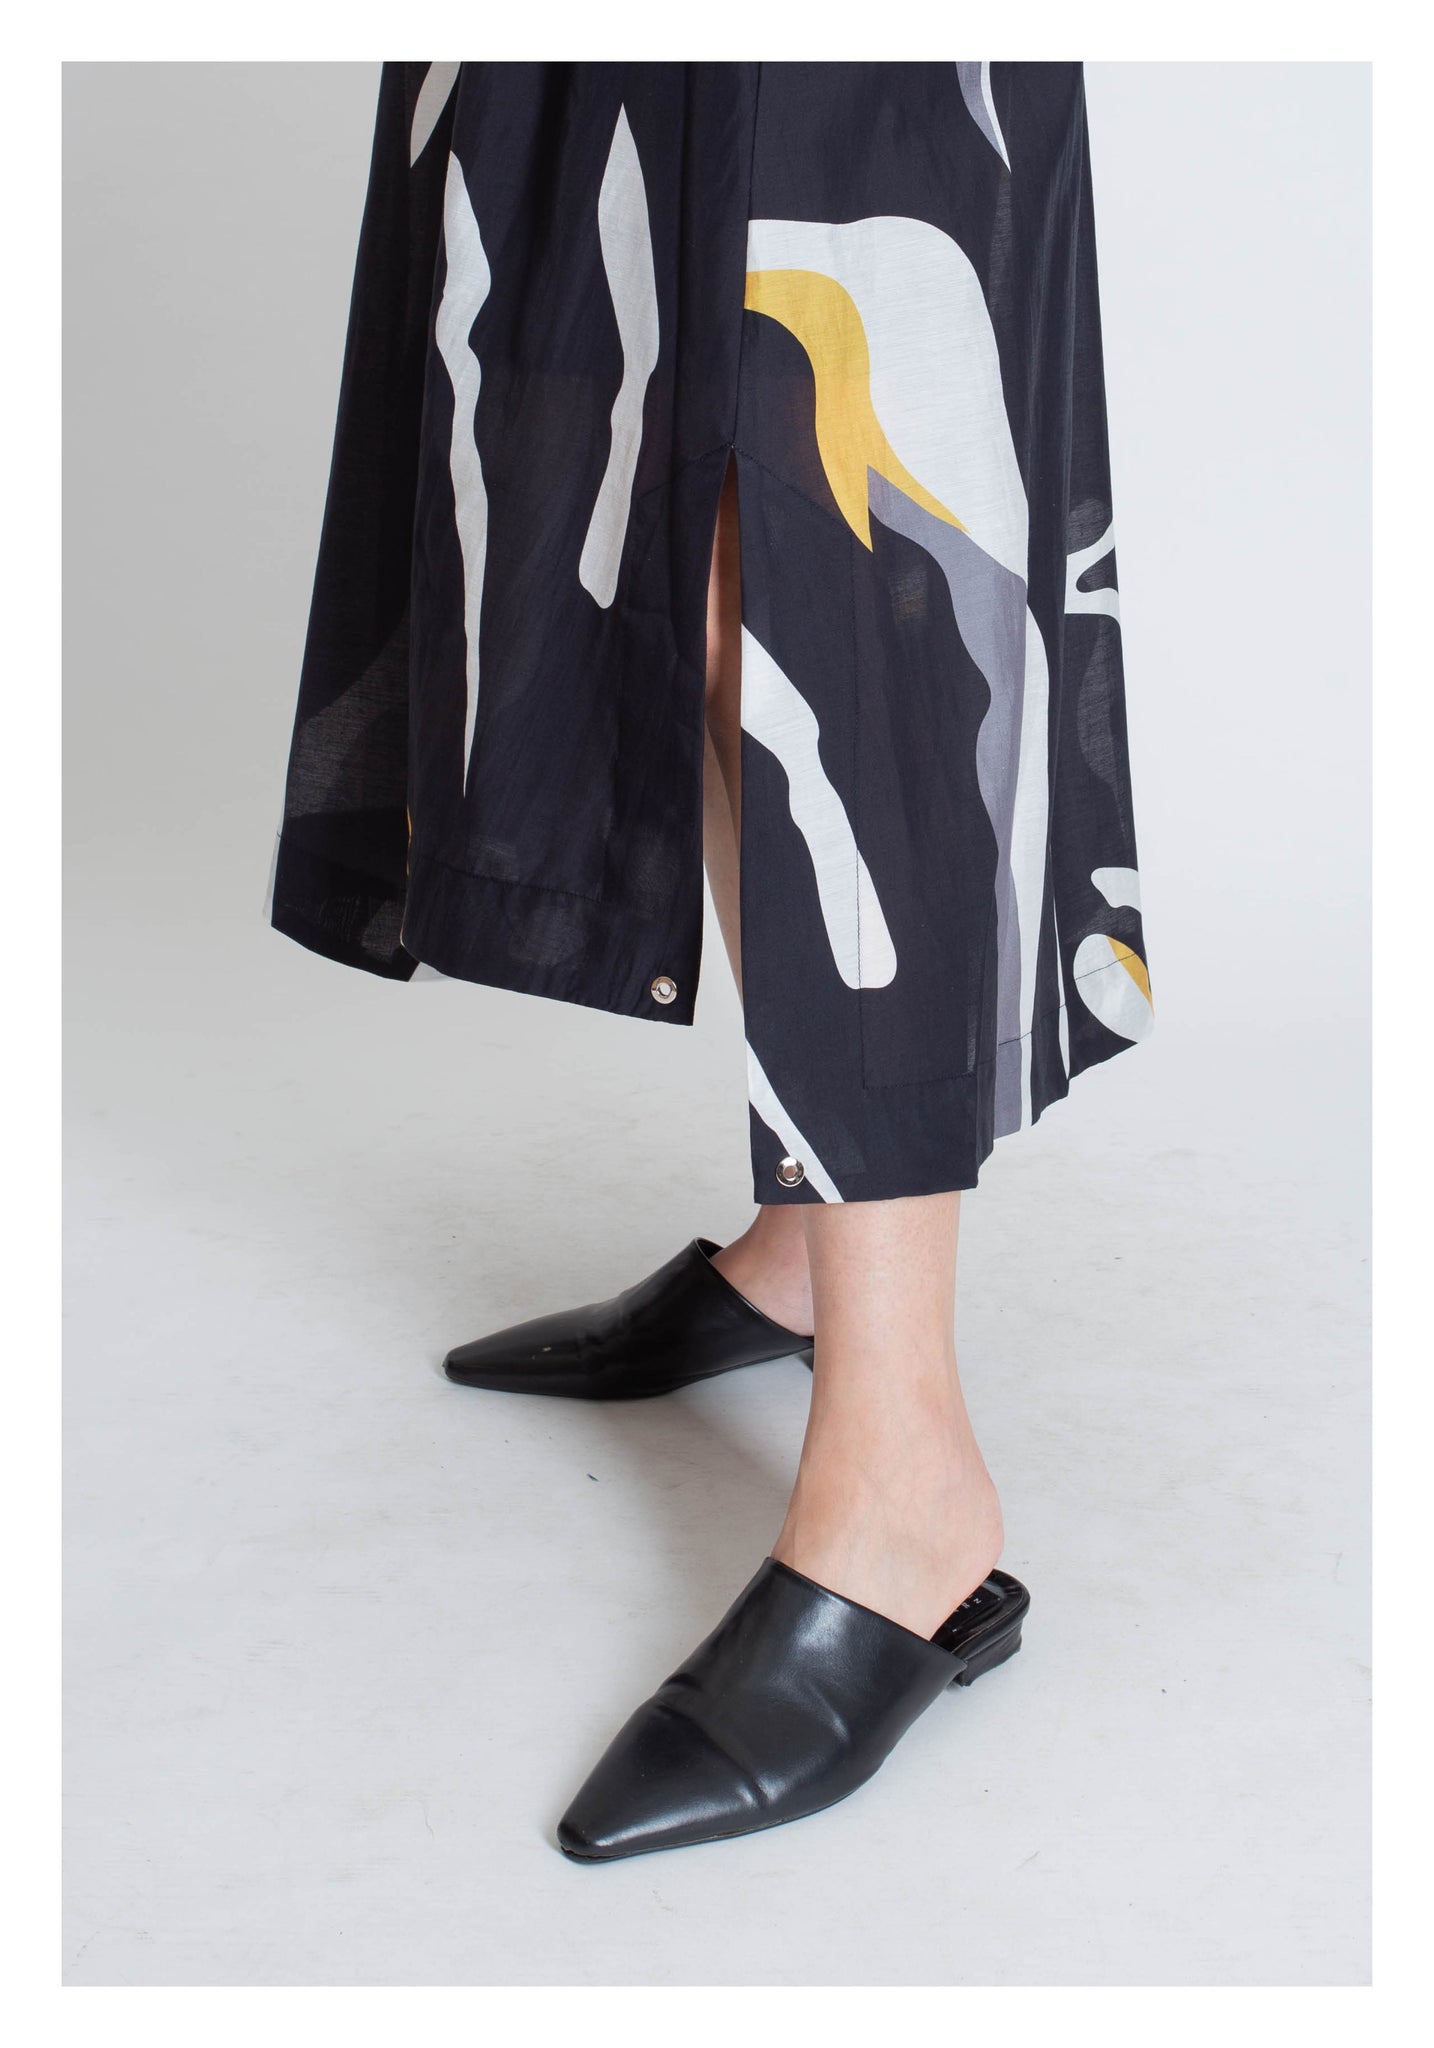 Abstract Pattern Slit Skirt - whoami